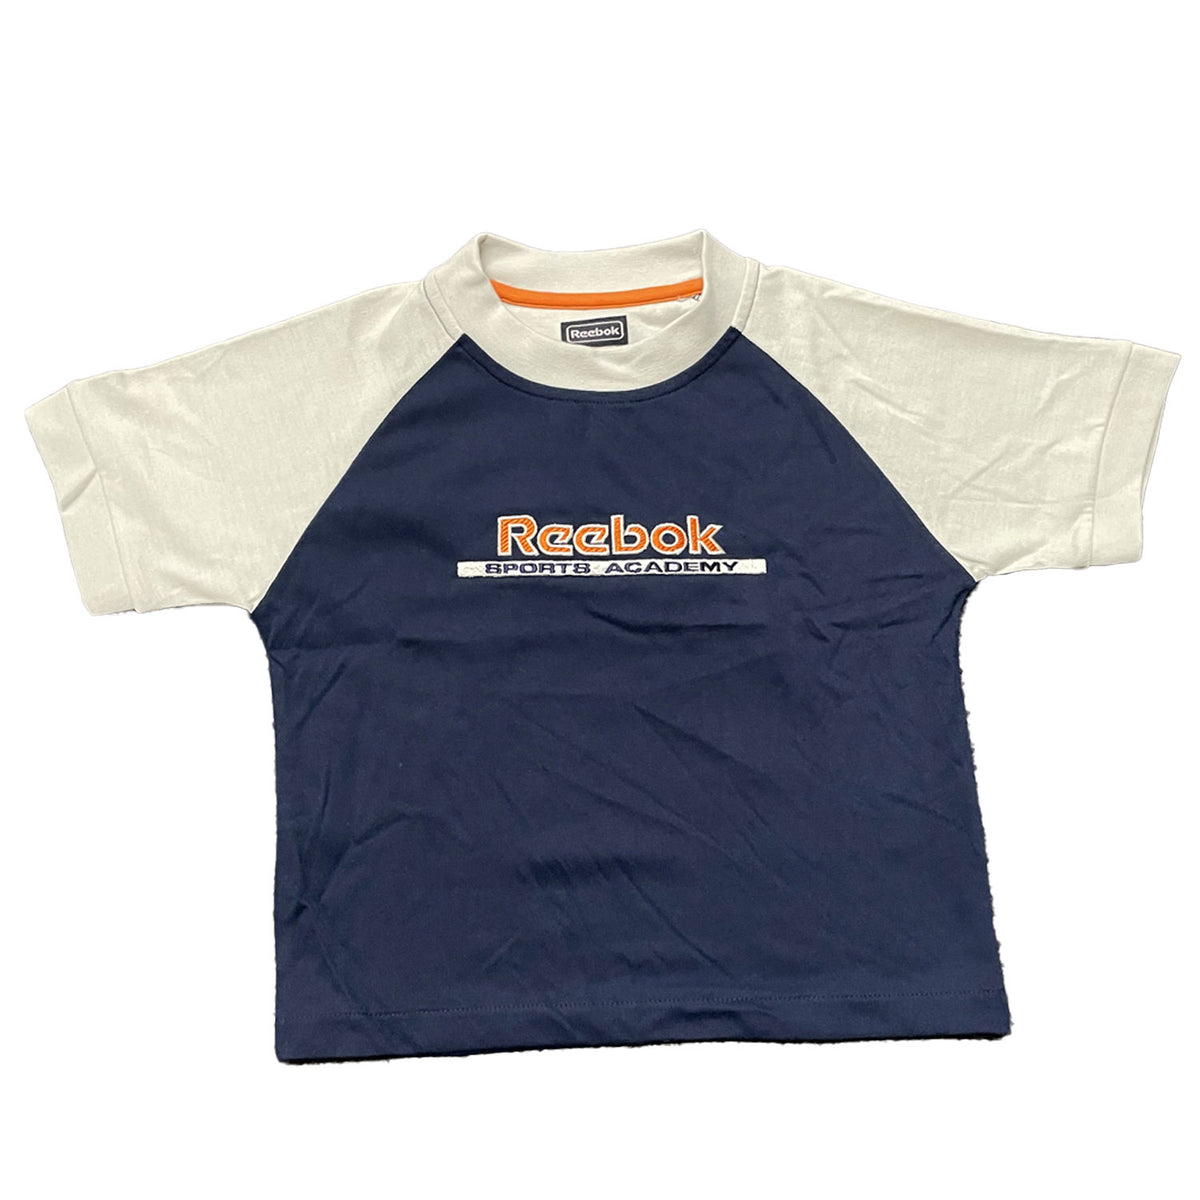 Reebok Infants Sport Academy T-Shirt 7